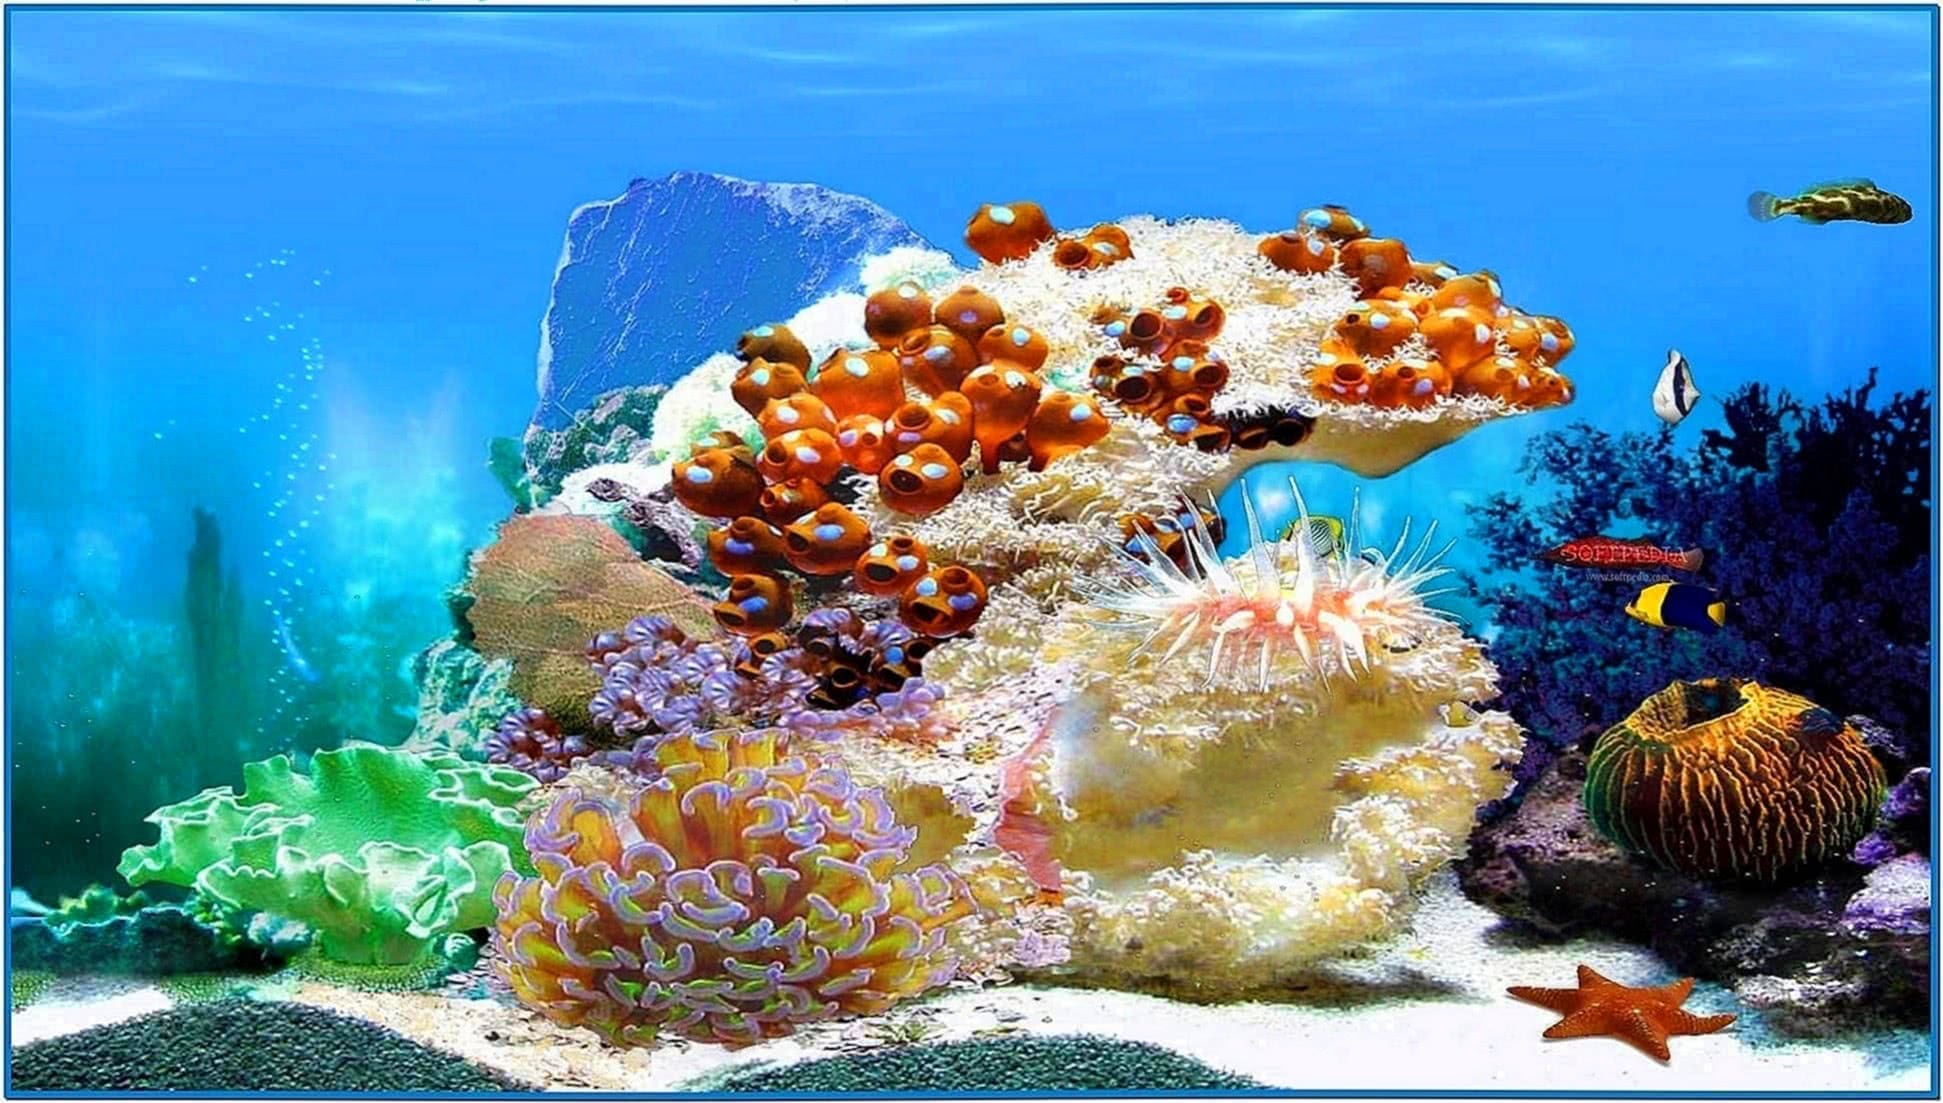 Animated 3d aquarium screensaver - Download free